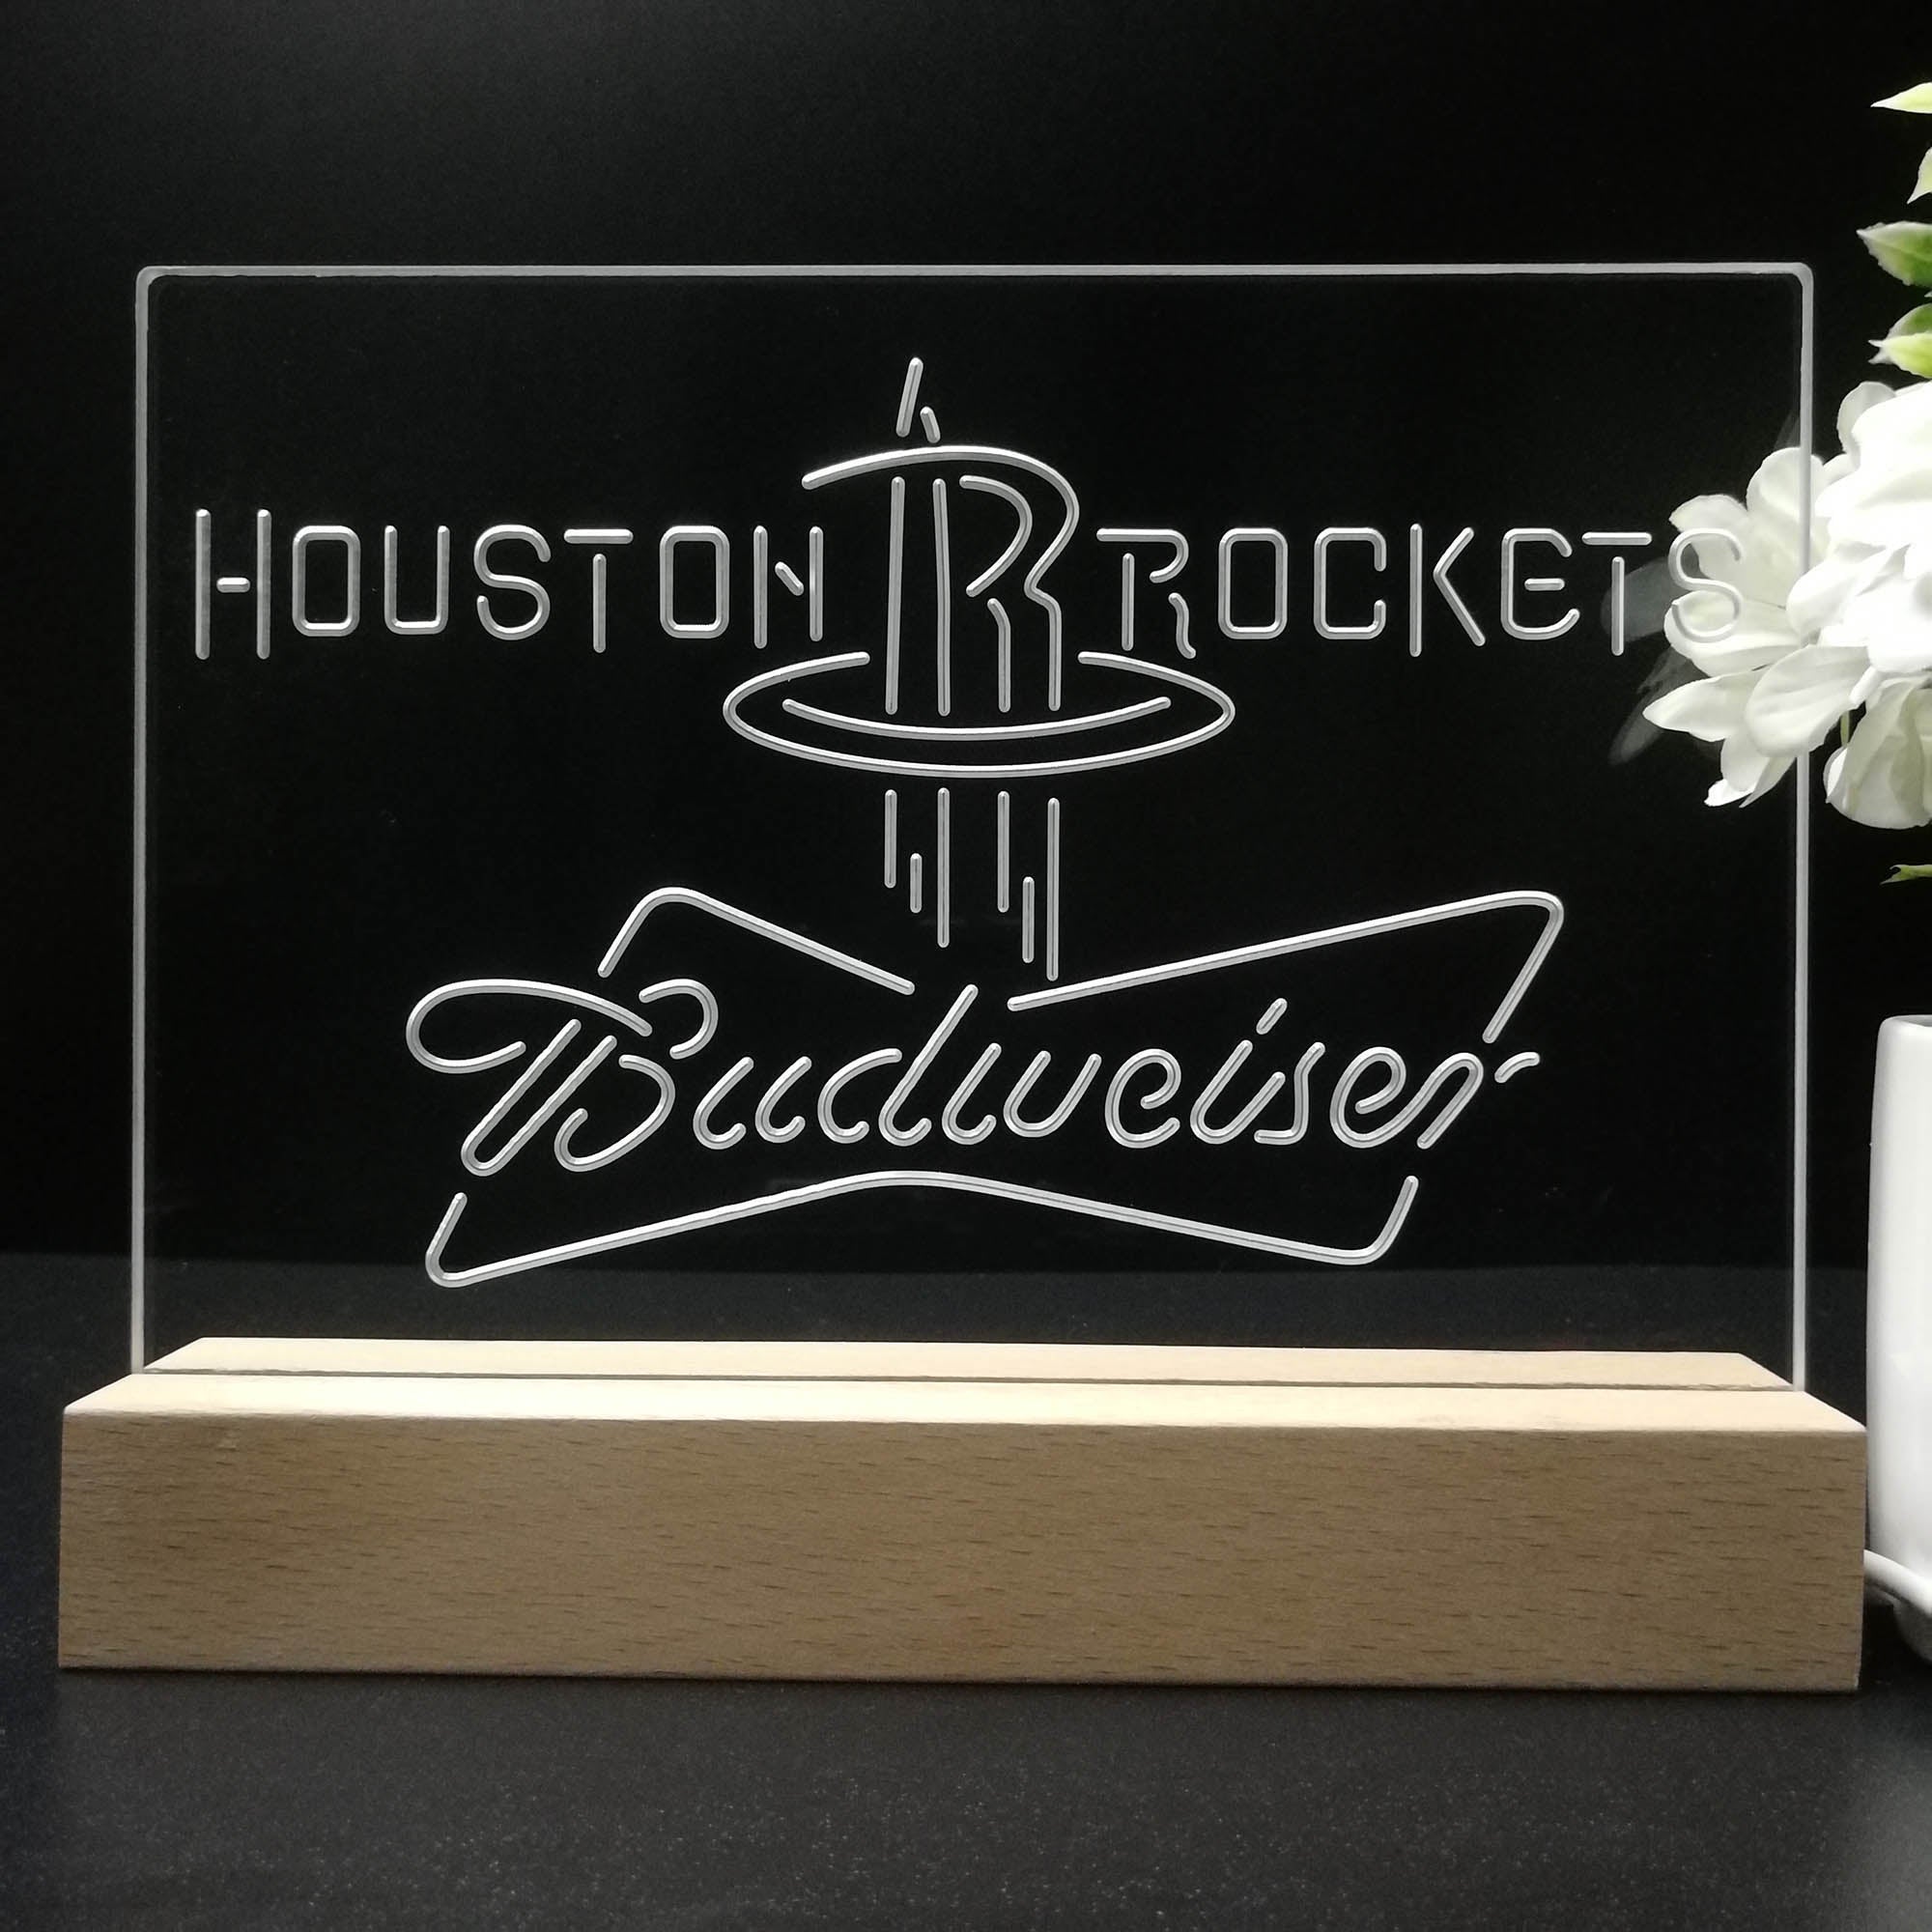 Houston Rockets Budweiser Sport Team Night Light 3D Illusion Lamp